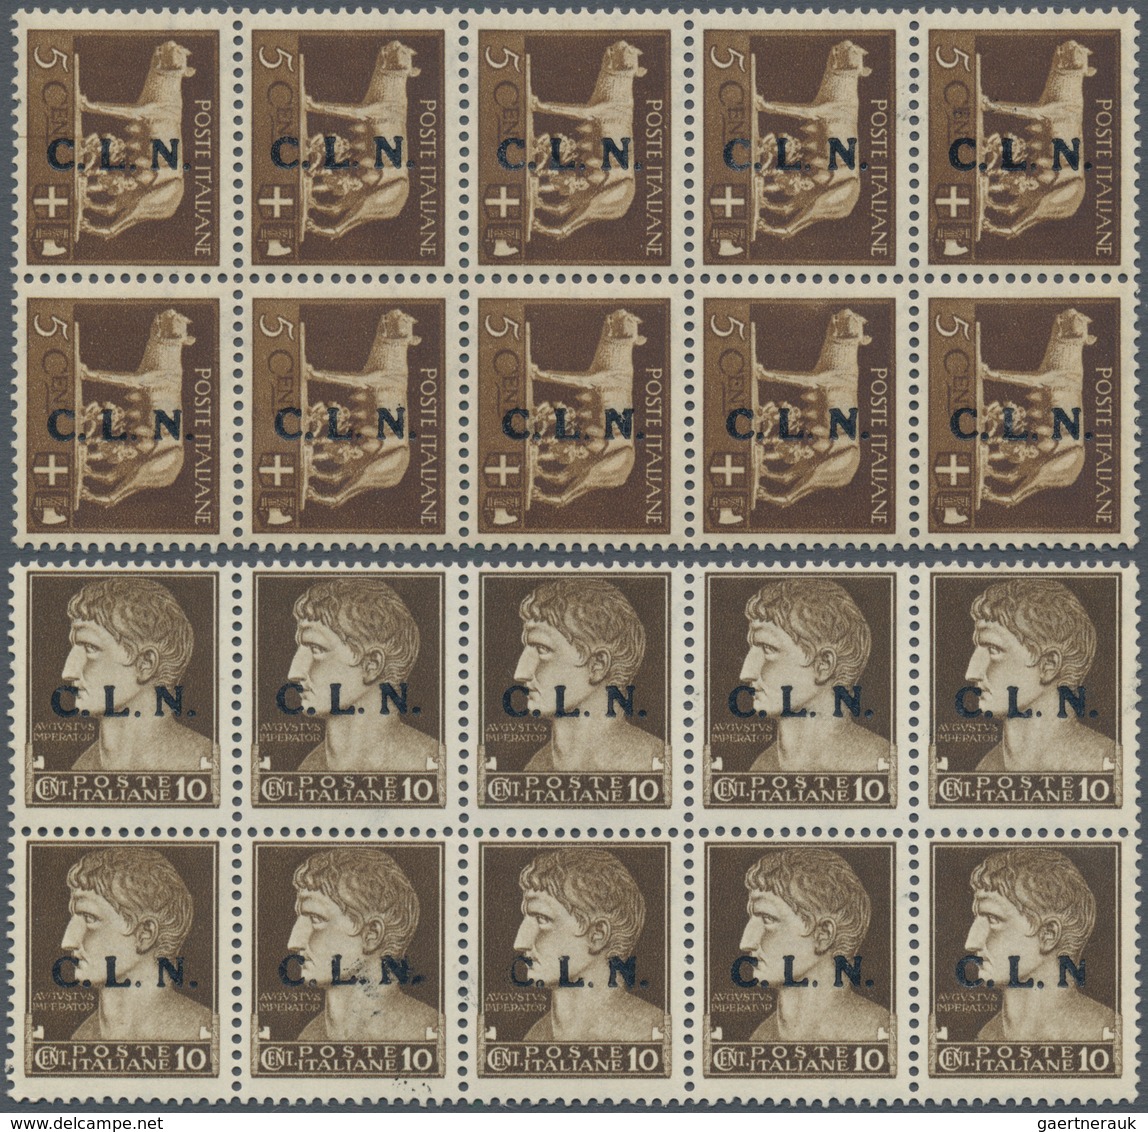 Italien: 1944, C.L.N. TORINO Local Issue, 5 C Brown, 10 C Grey-brown, 15 C Dark Green And 1 L Violet - Gebraucht